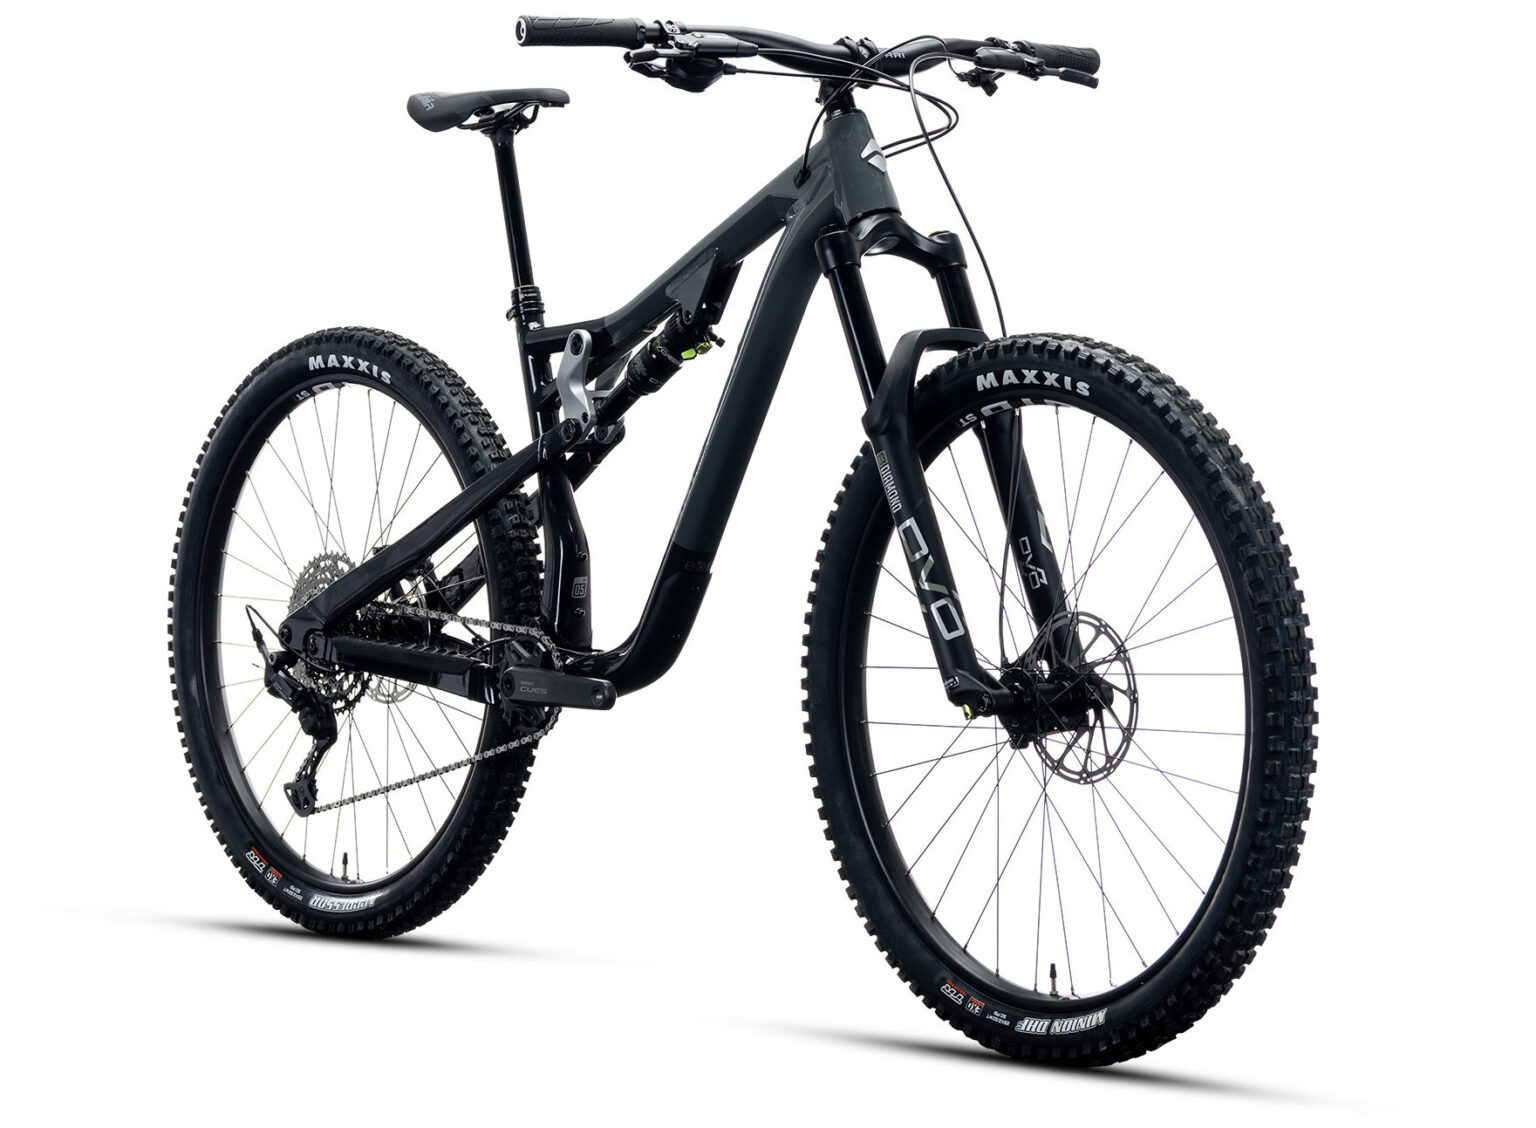 ari cascade alloy trail bike shown from front angle in dark gray color